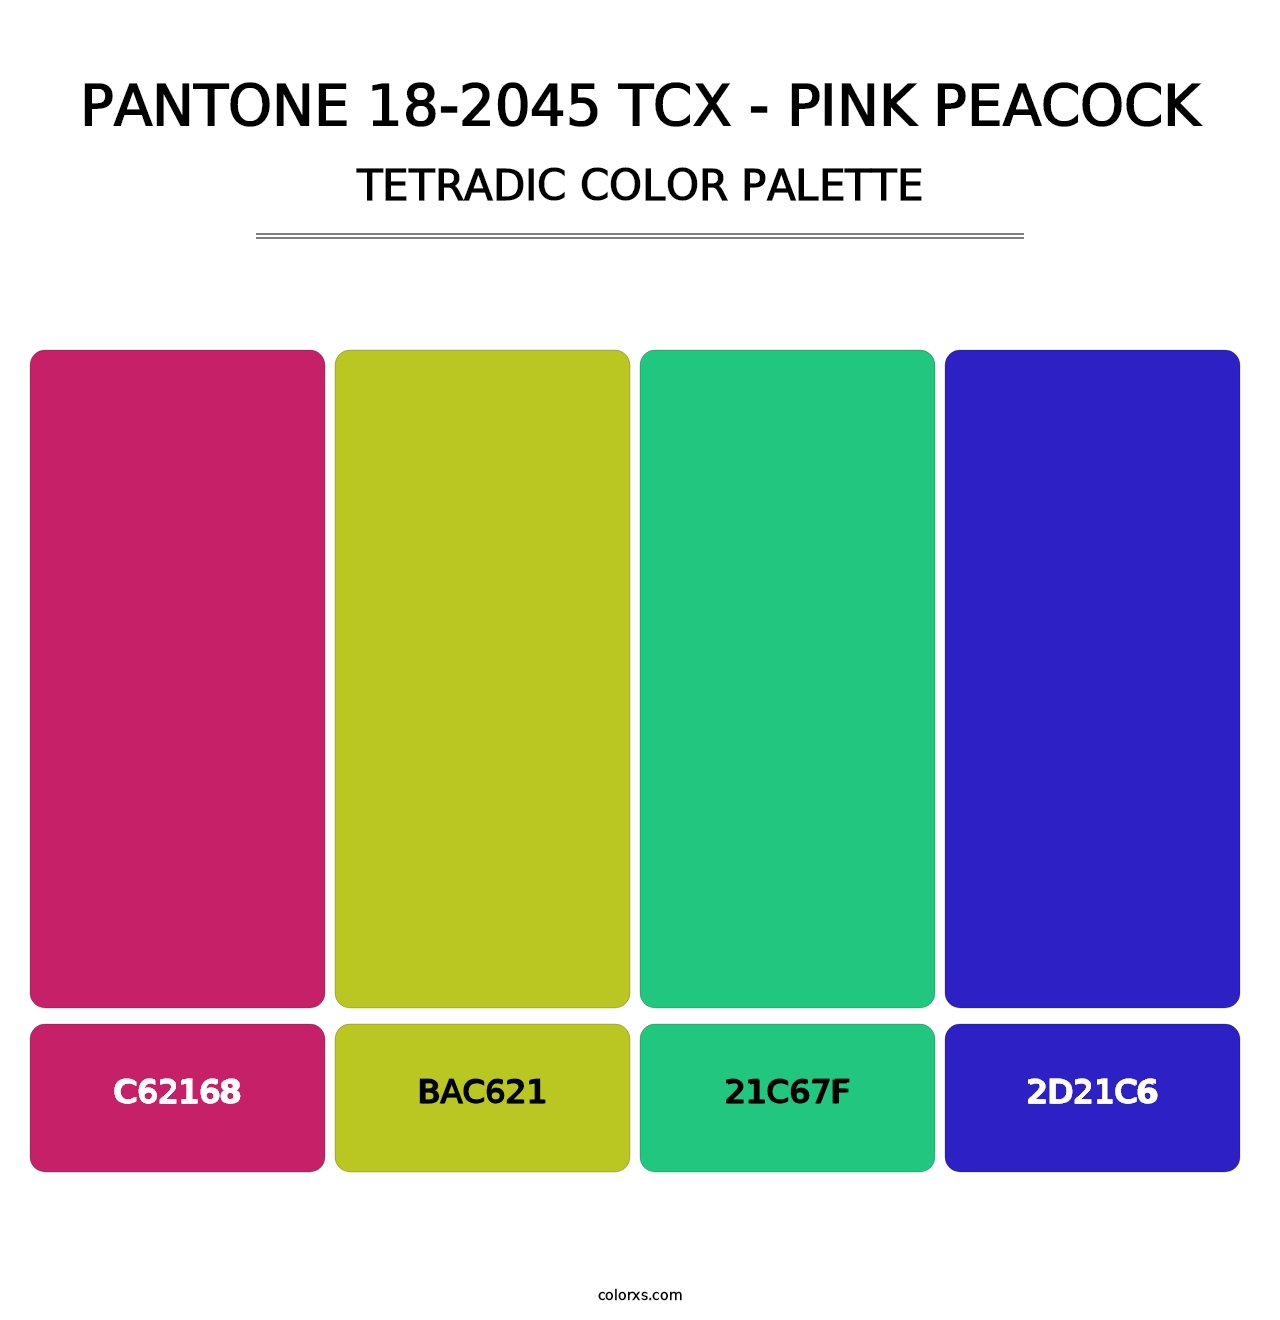 PANTONE 18-2045 TCX - Pink Peacock - Tetradic Color Palette